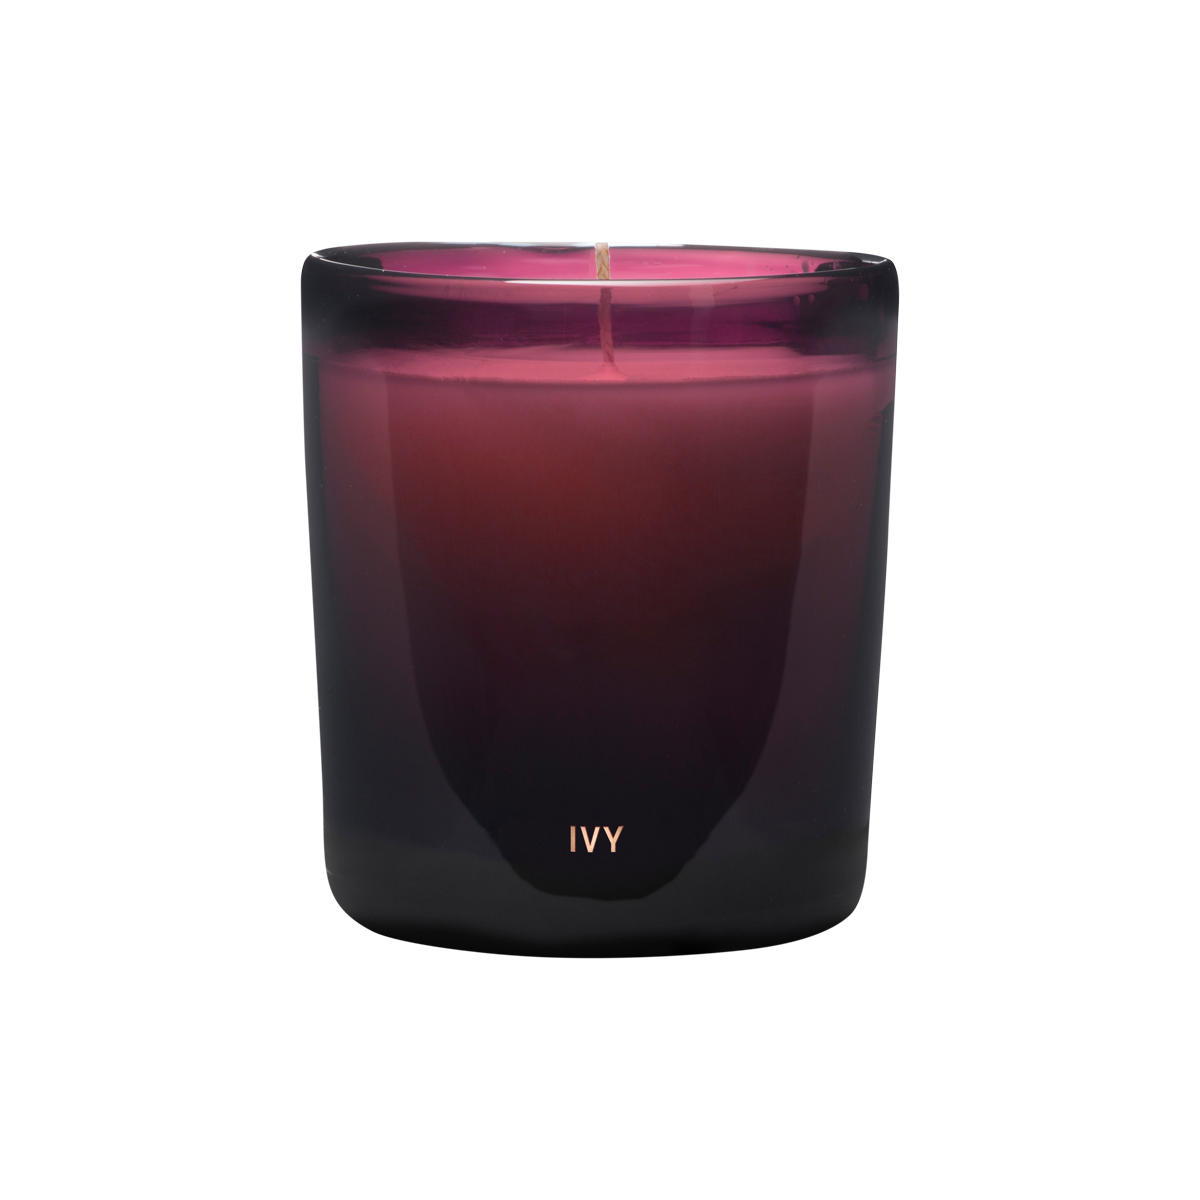 Perfumer H - Ivy Candle Handblown